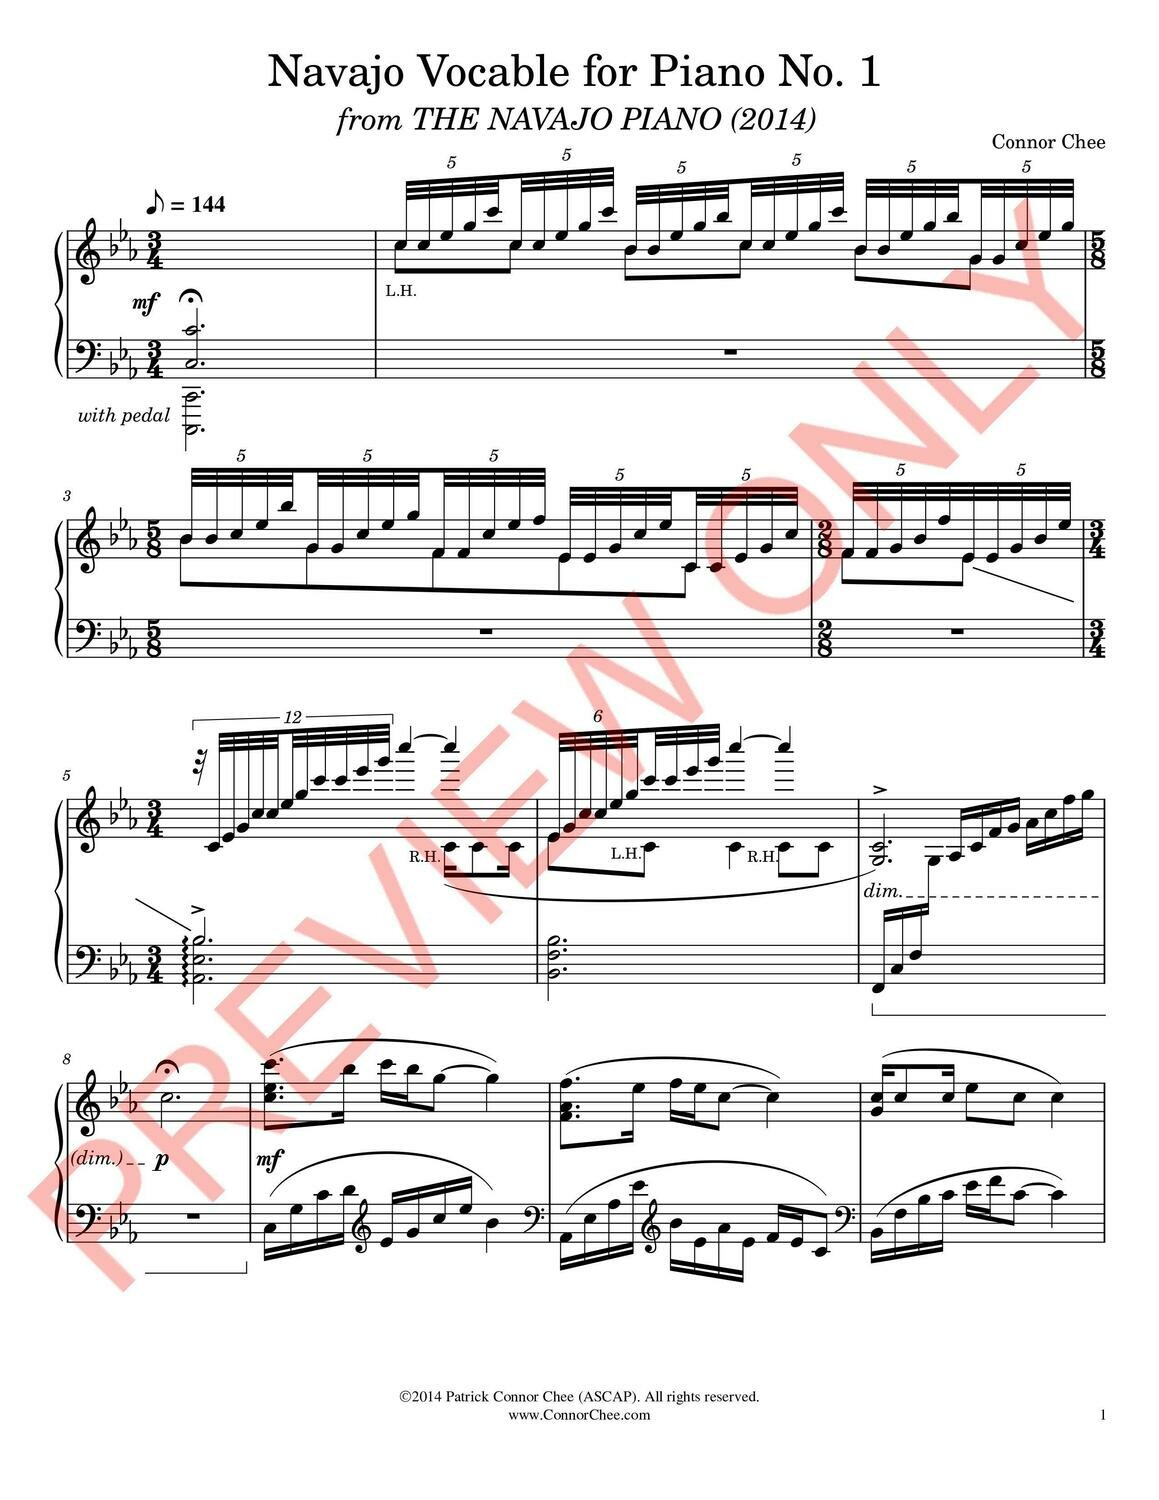 Digital Sheet Music - The Navajo Piano (Full Score)